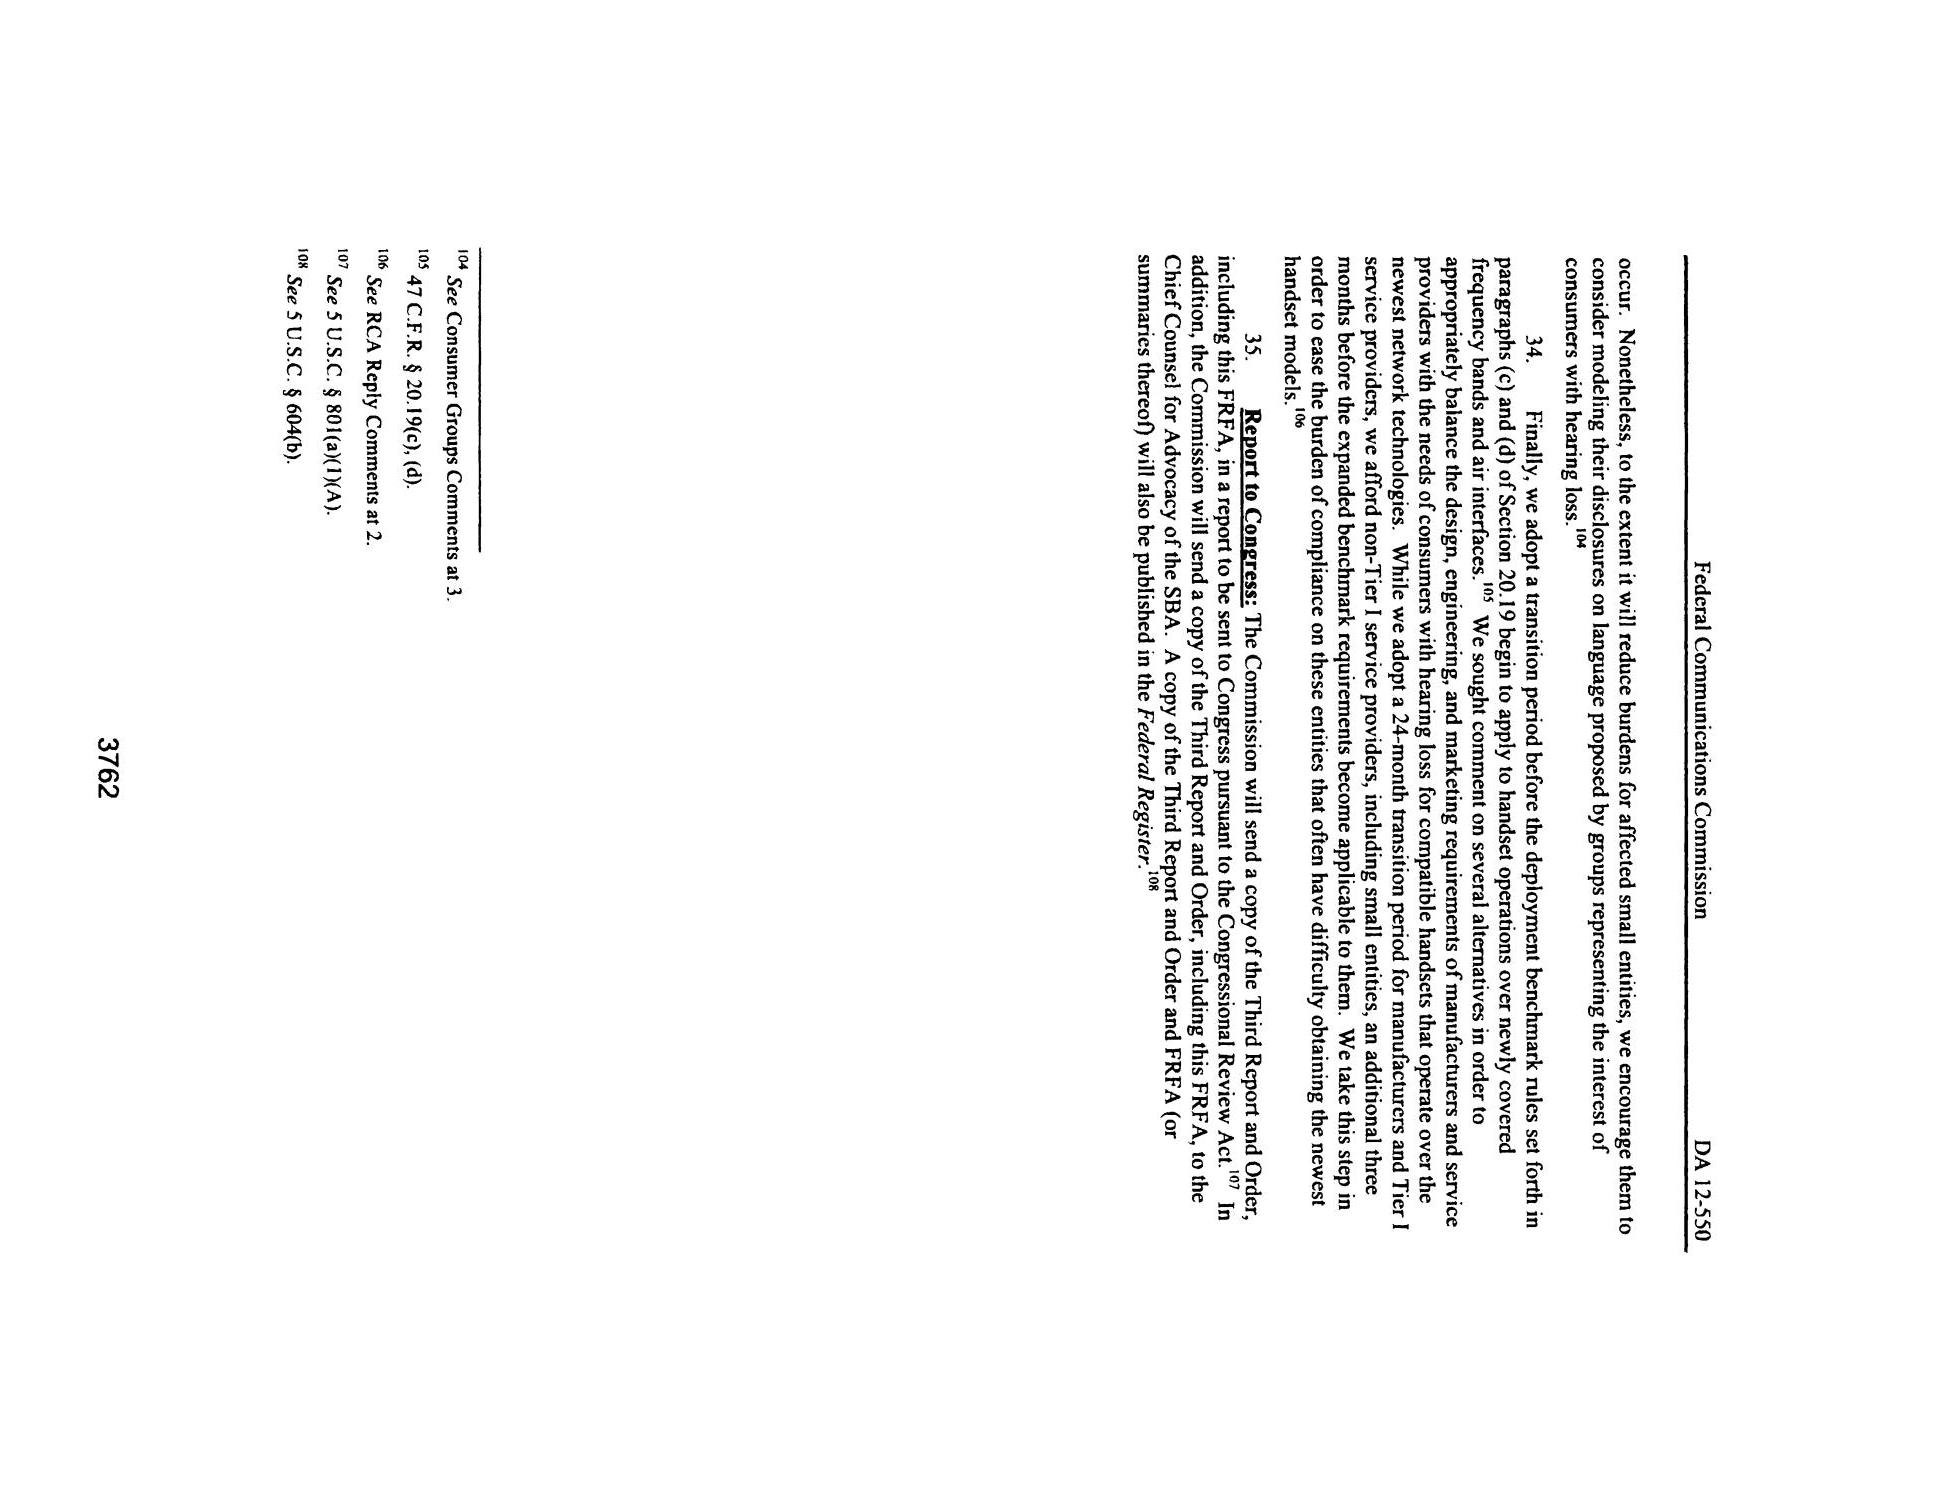 FCC Record, Volume 27, No. 5, Pages 3728 to 4696, April 9 - April 27, 2012
                                                
                                                    3762
                                                